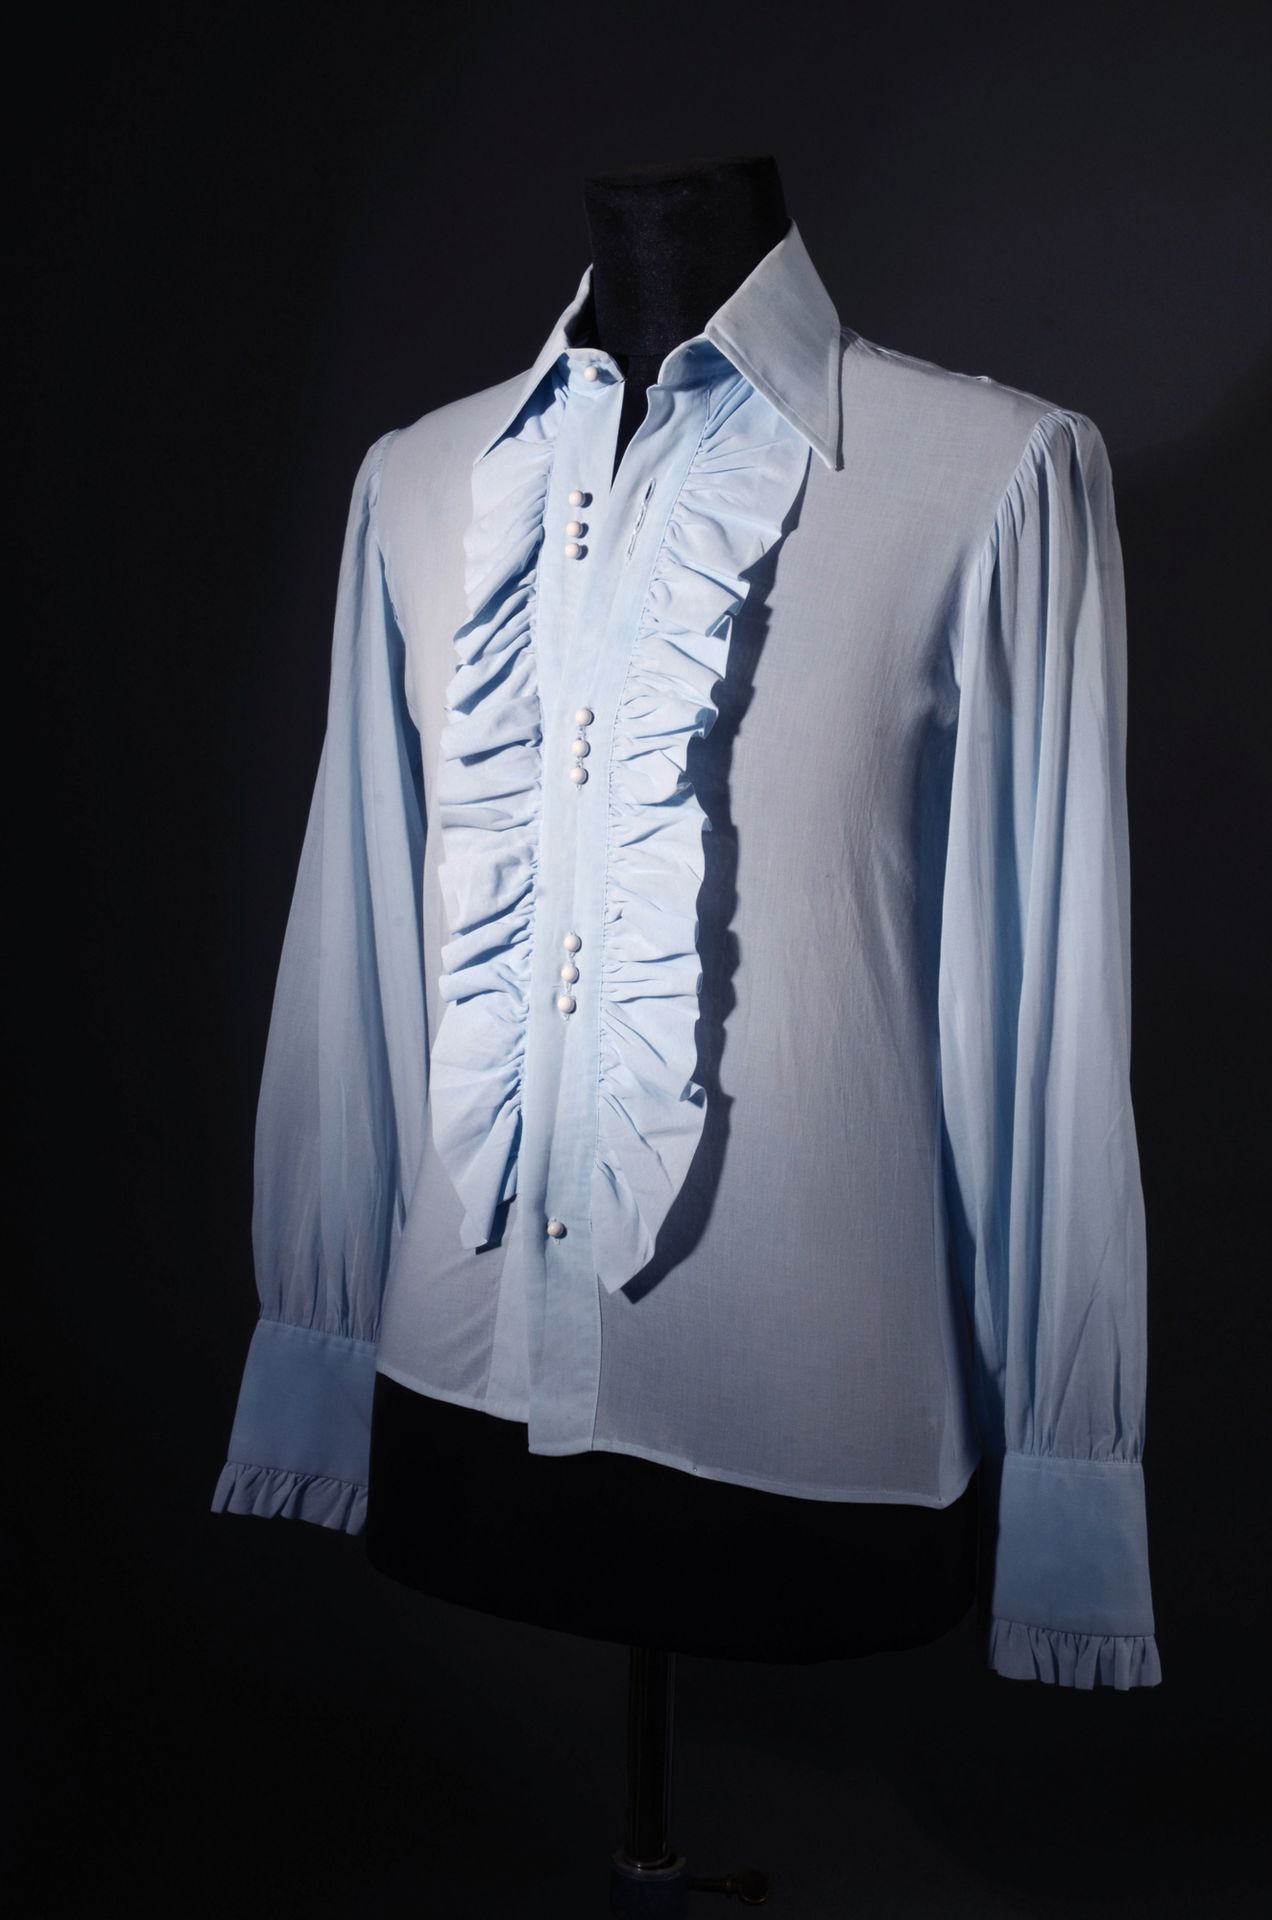 Null MIKE BRANT
1 camisa con volantes, de percal de algodón, azul cielo, utiliza&hellip;